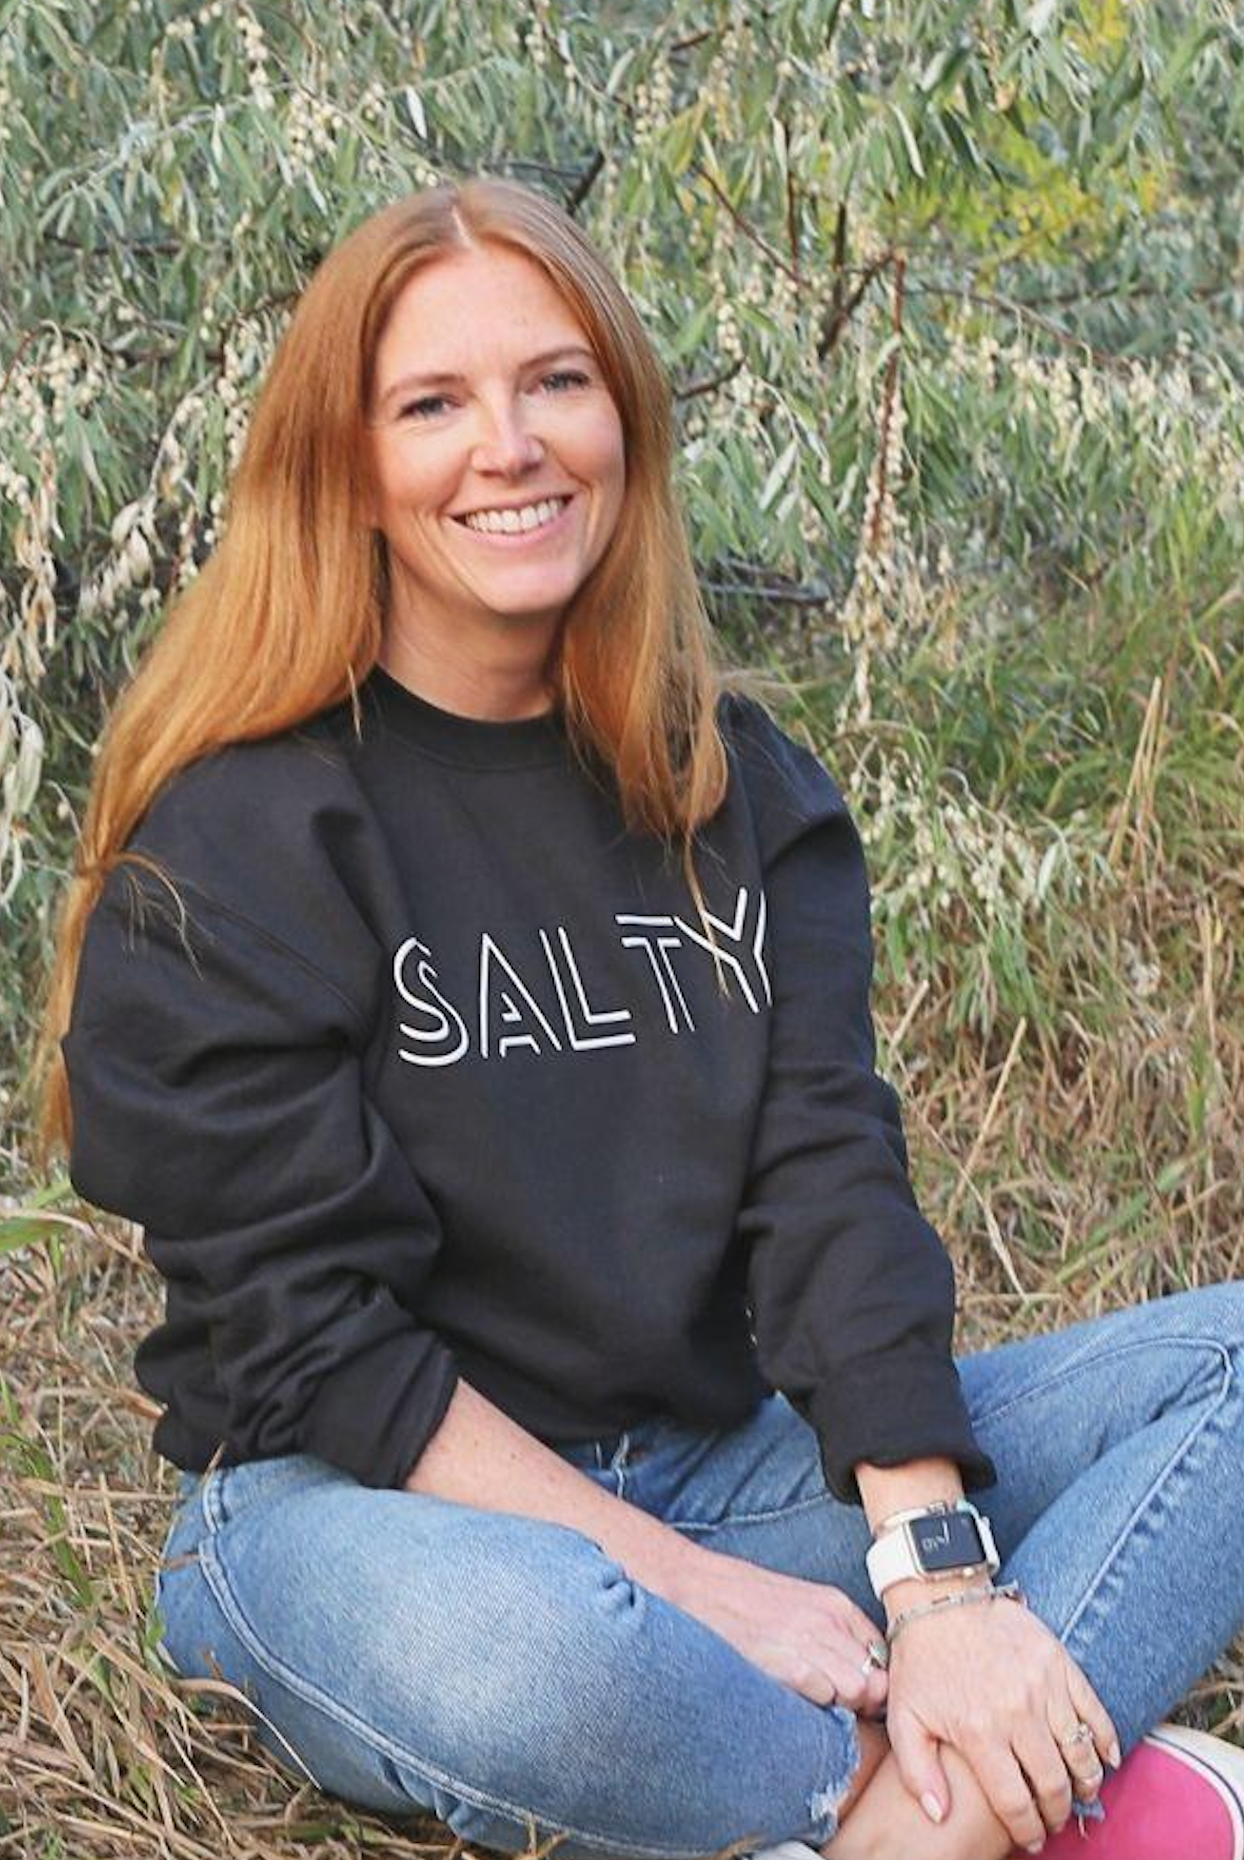 Salty Sweatshirt - All sales final